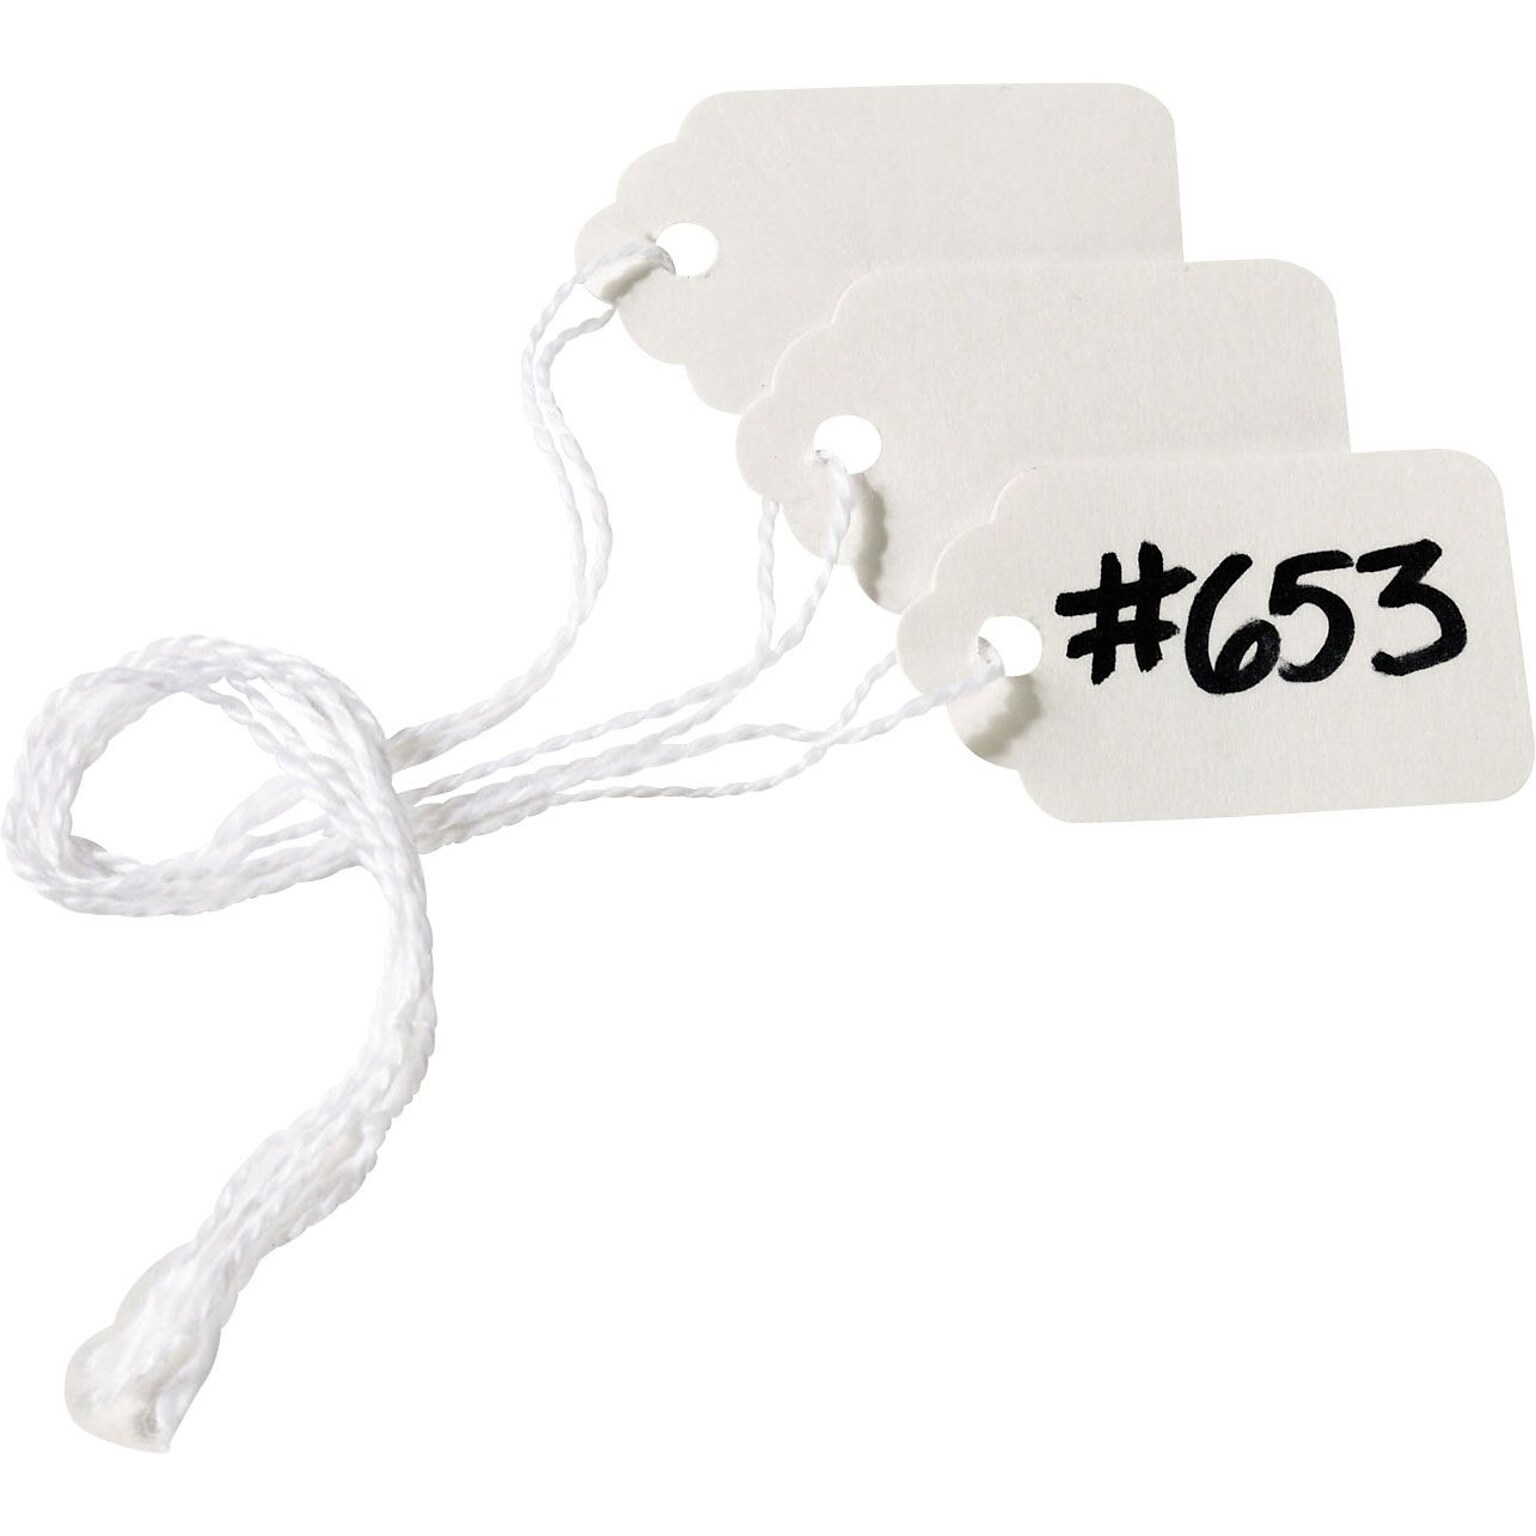 Avery® White Marking Tags, 2 3/4 x 1 11/16, 1,000/Box